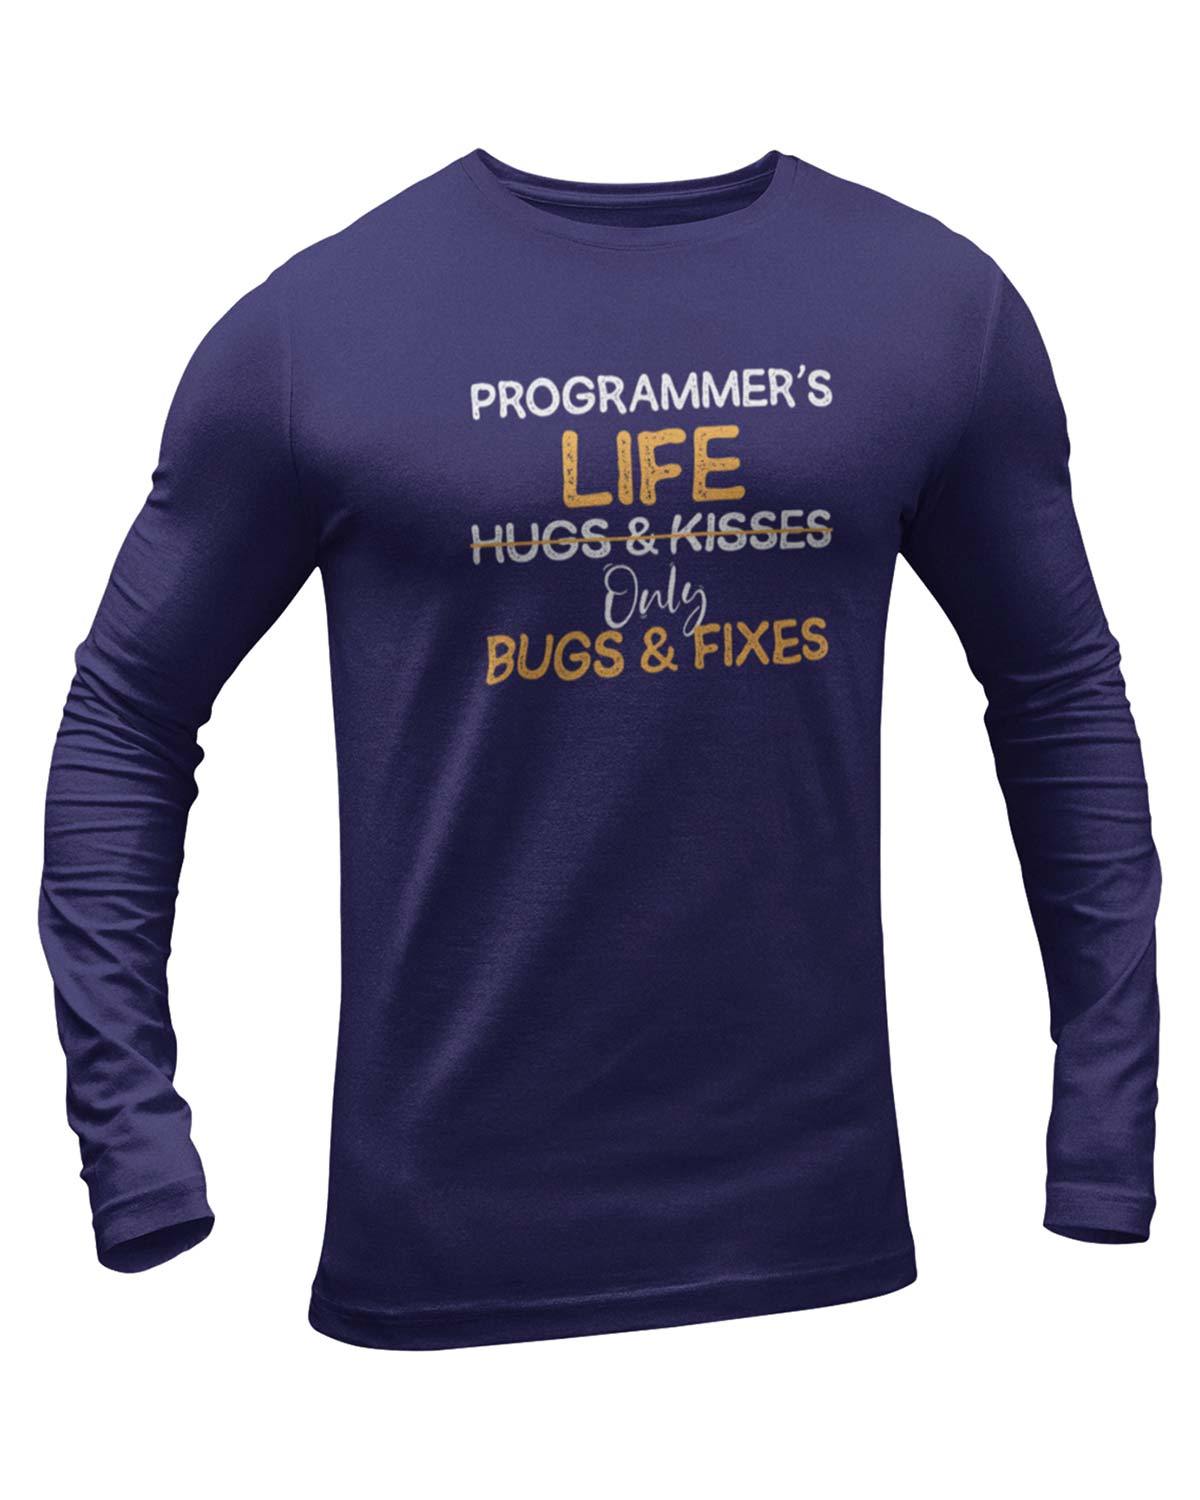 No Hugs & Kisses Only Bugs & Fixes Full Sleeve Geek T-Shirt - DudeMe